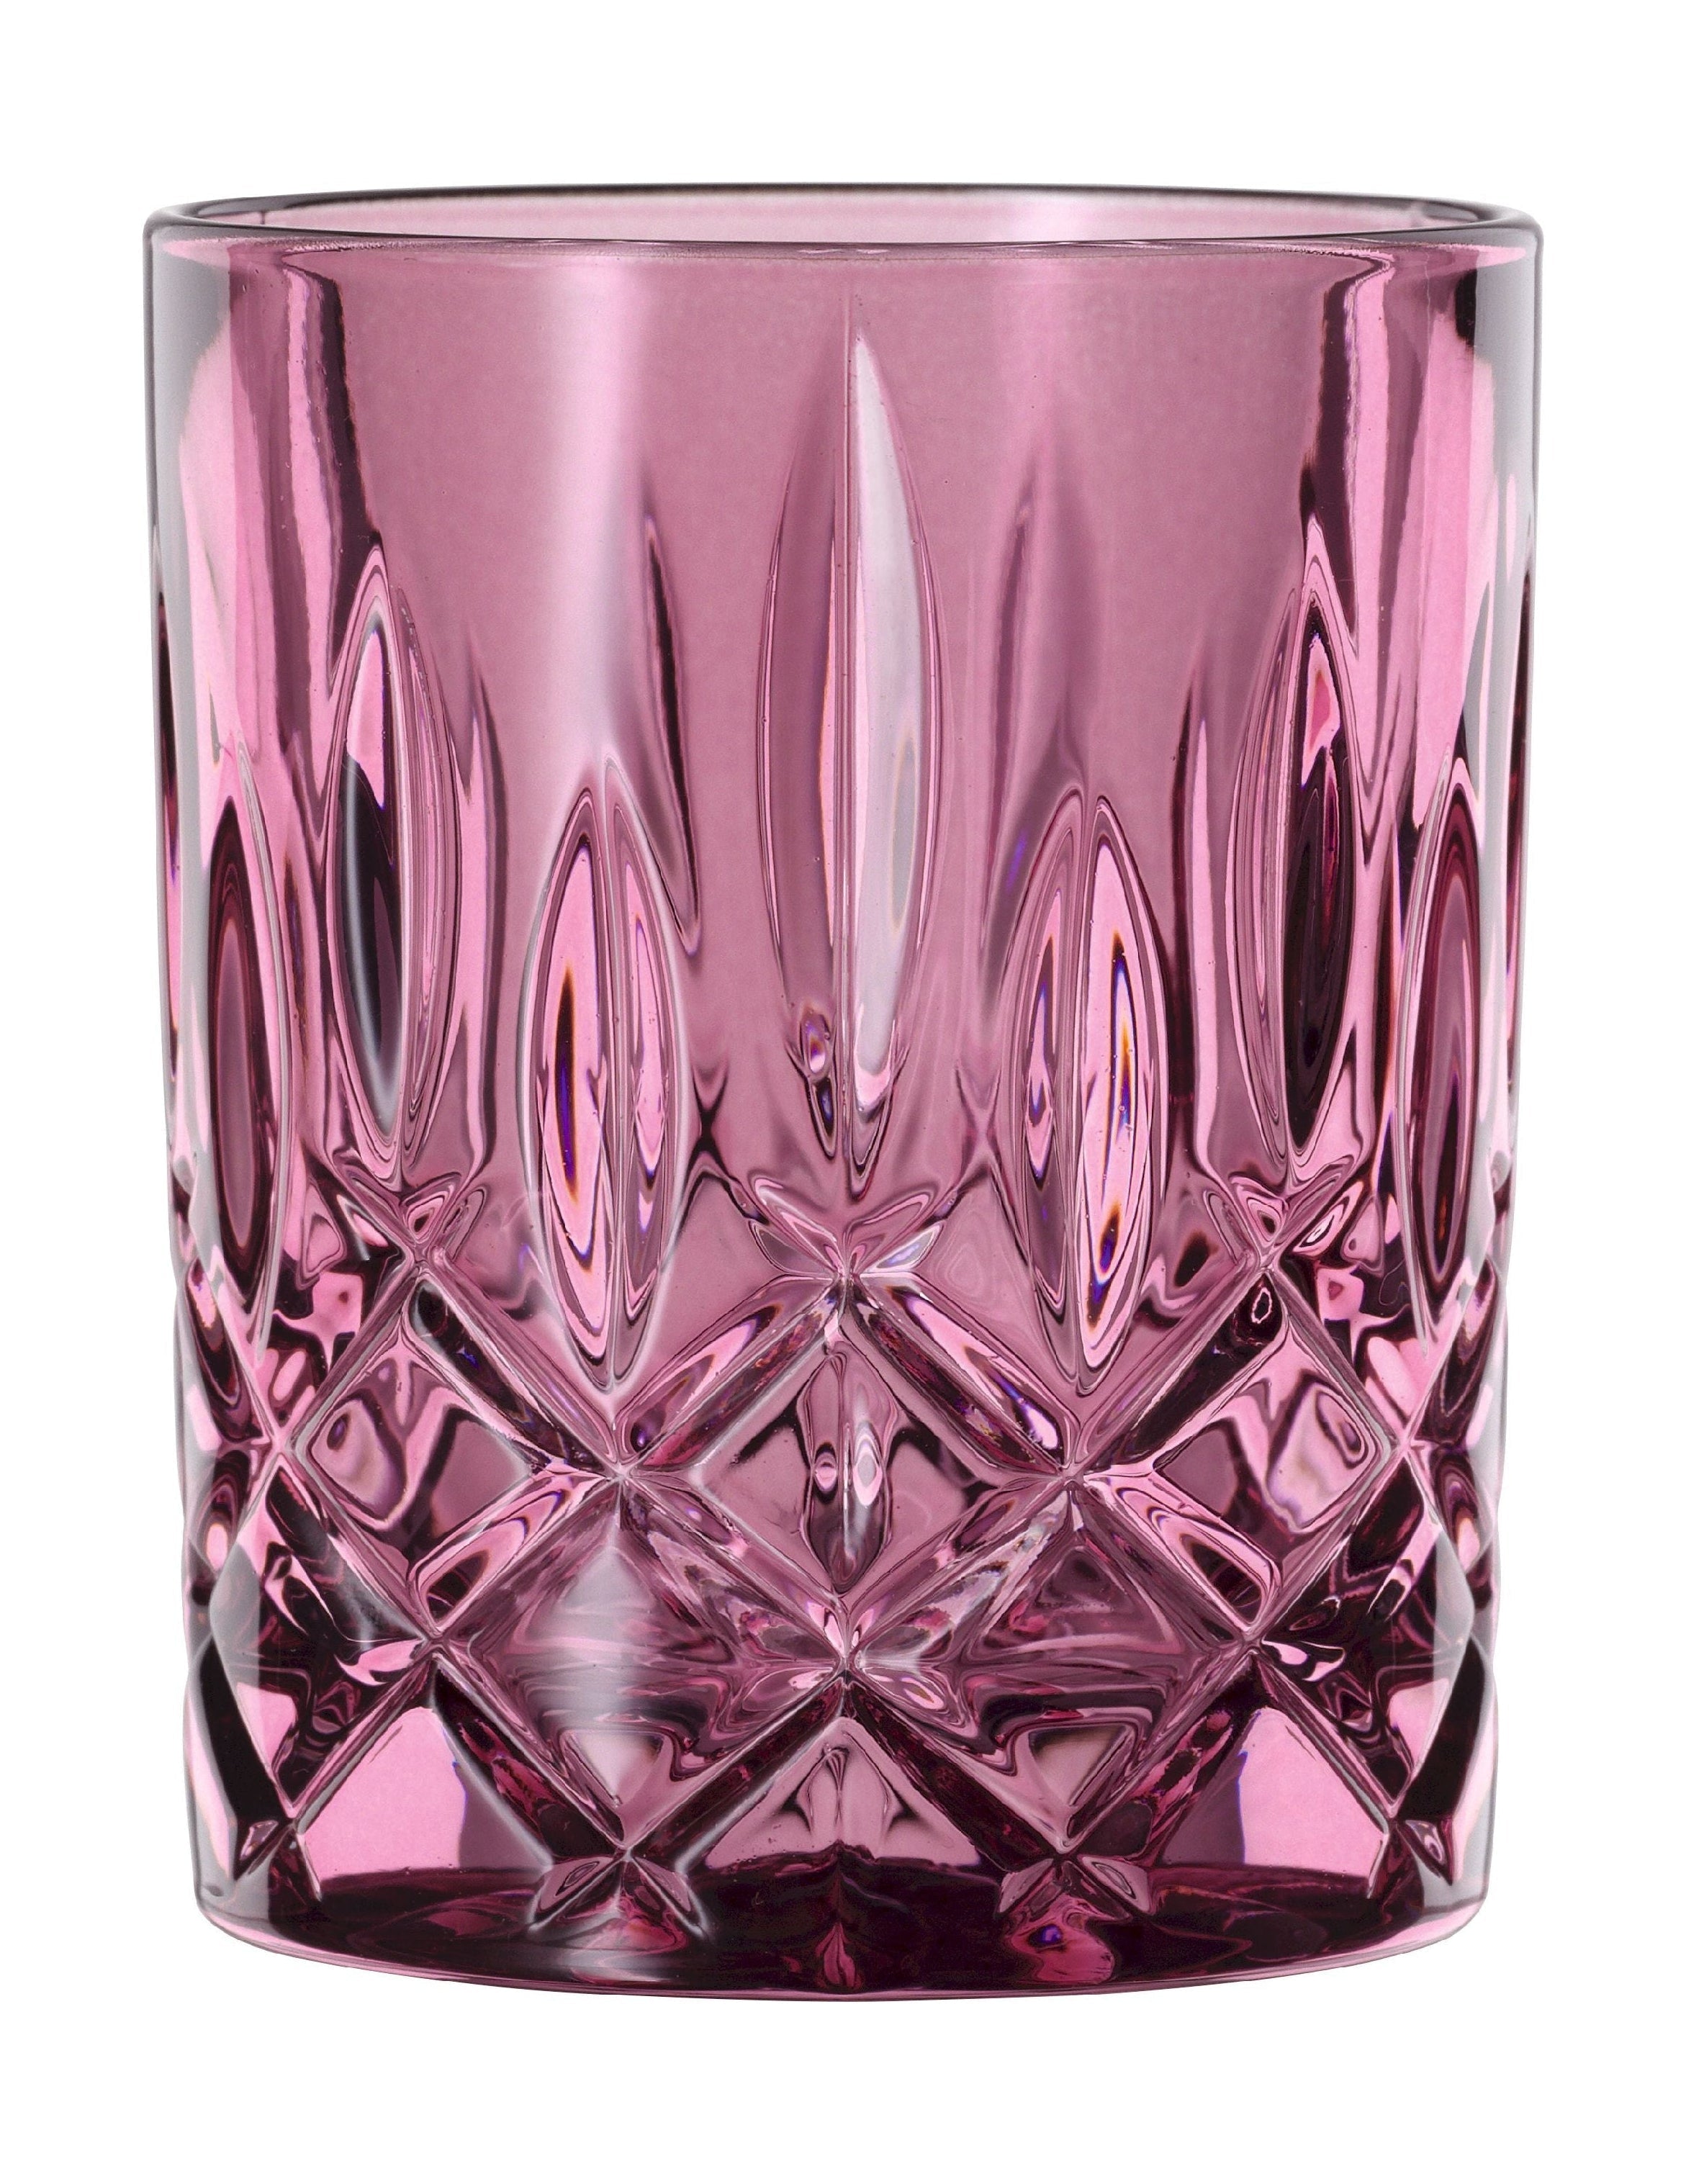 Nachtmann Noblesse Whisky Glass Berry 295 ml, sada 2